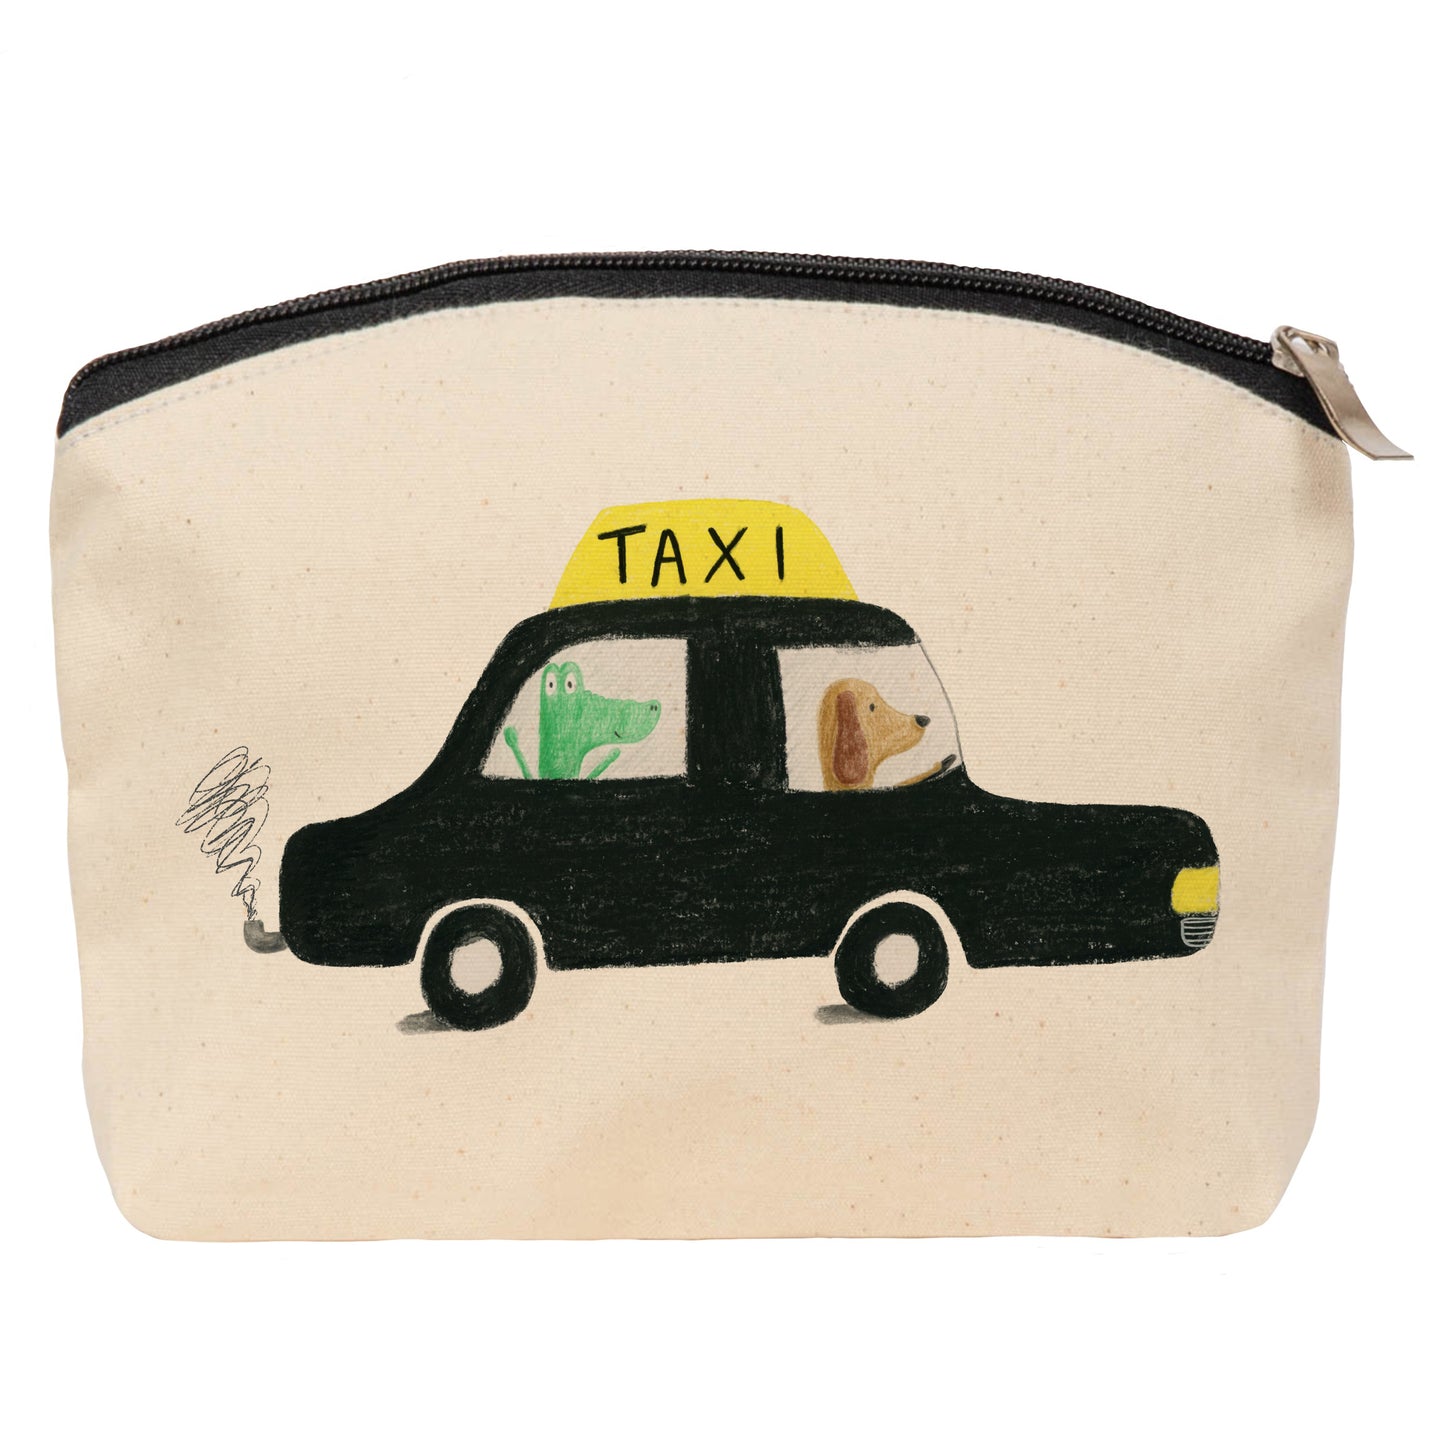 Taxi cosmetic bag